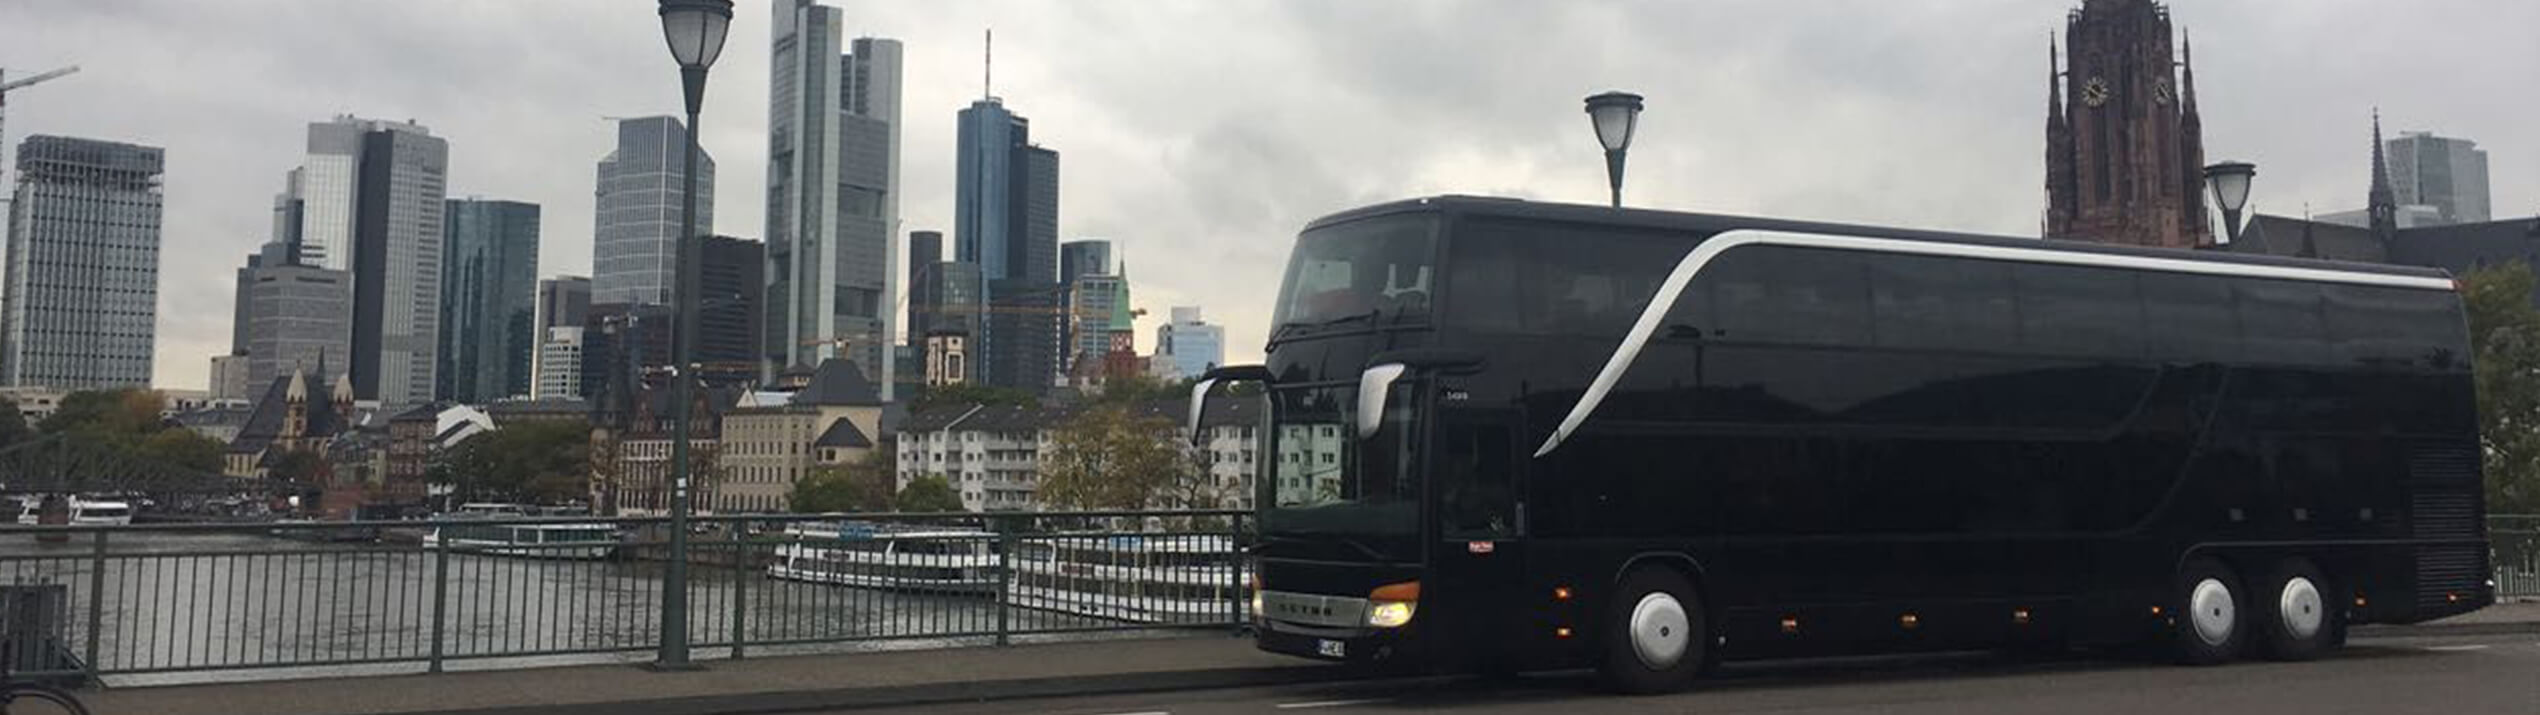 Luxury coach in front of the Frankfurt skyline